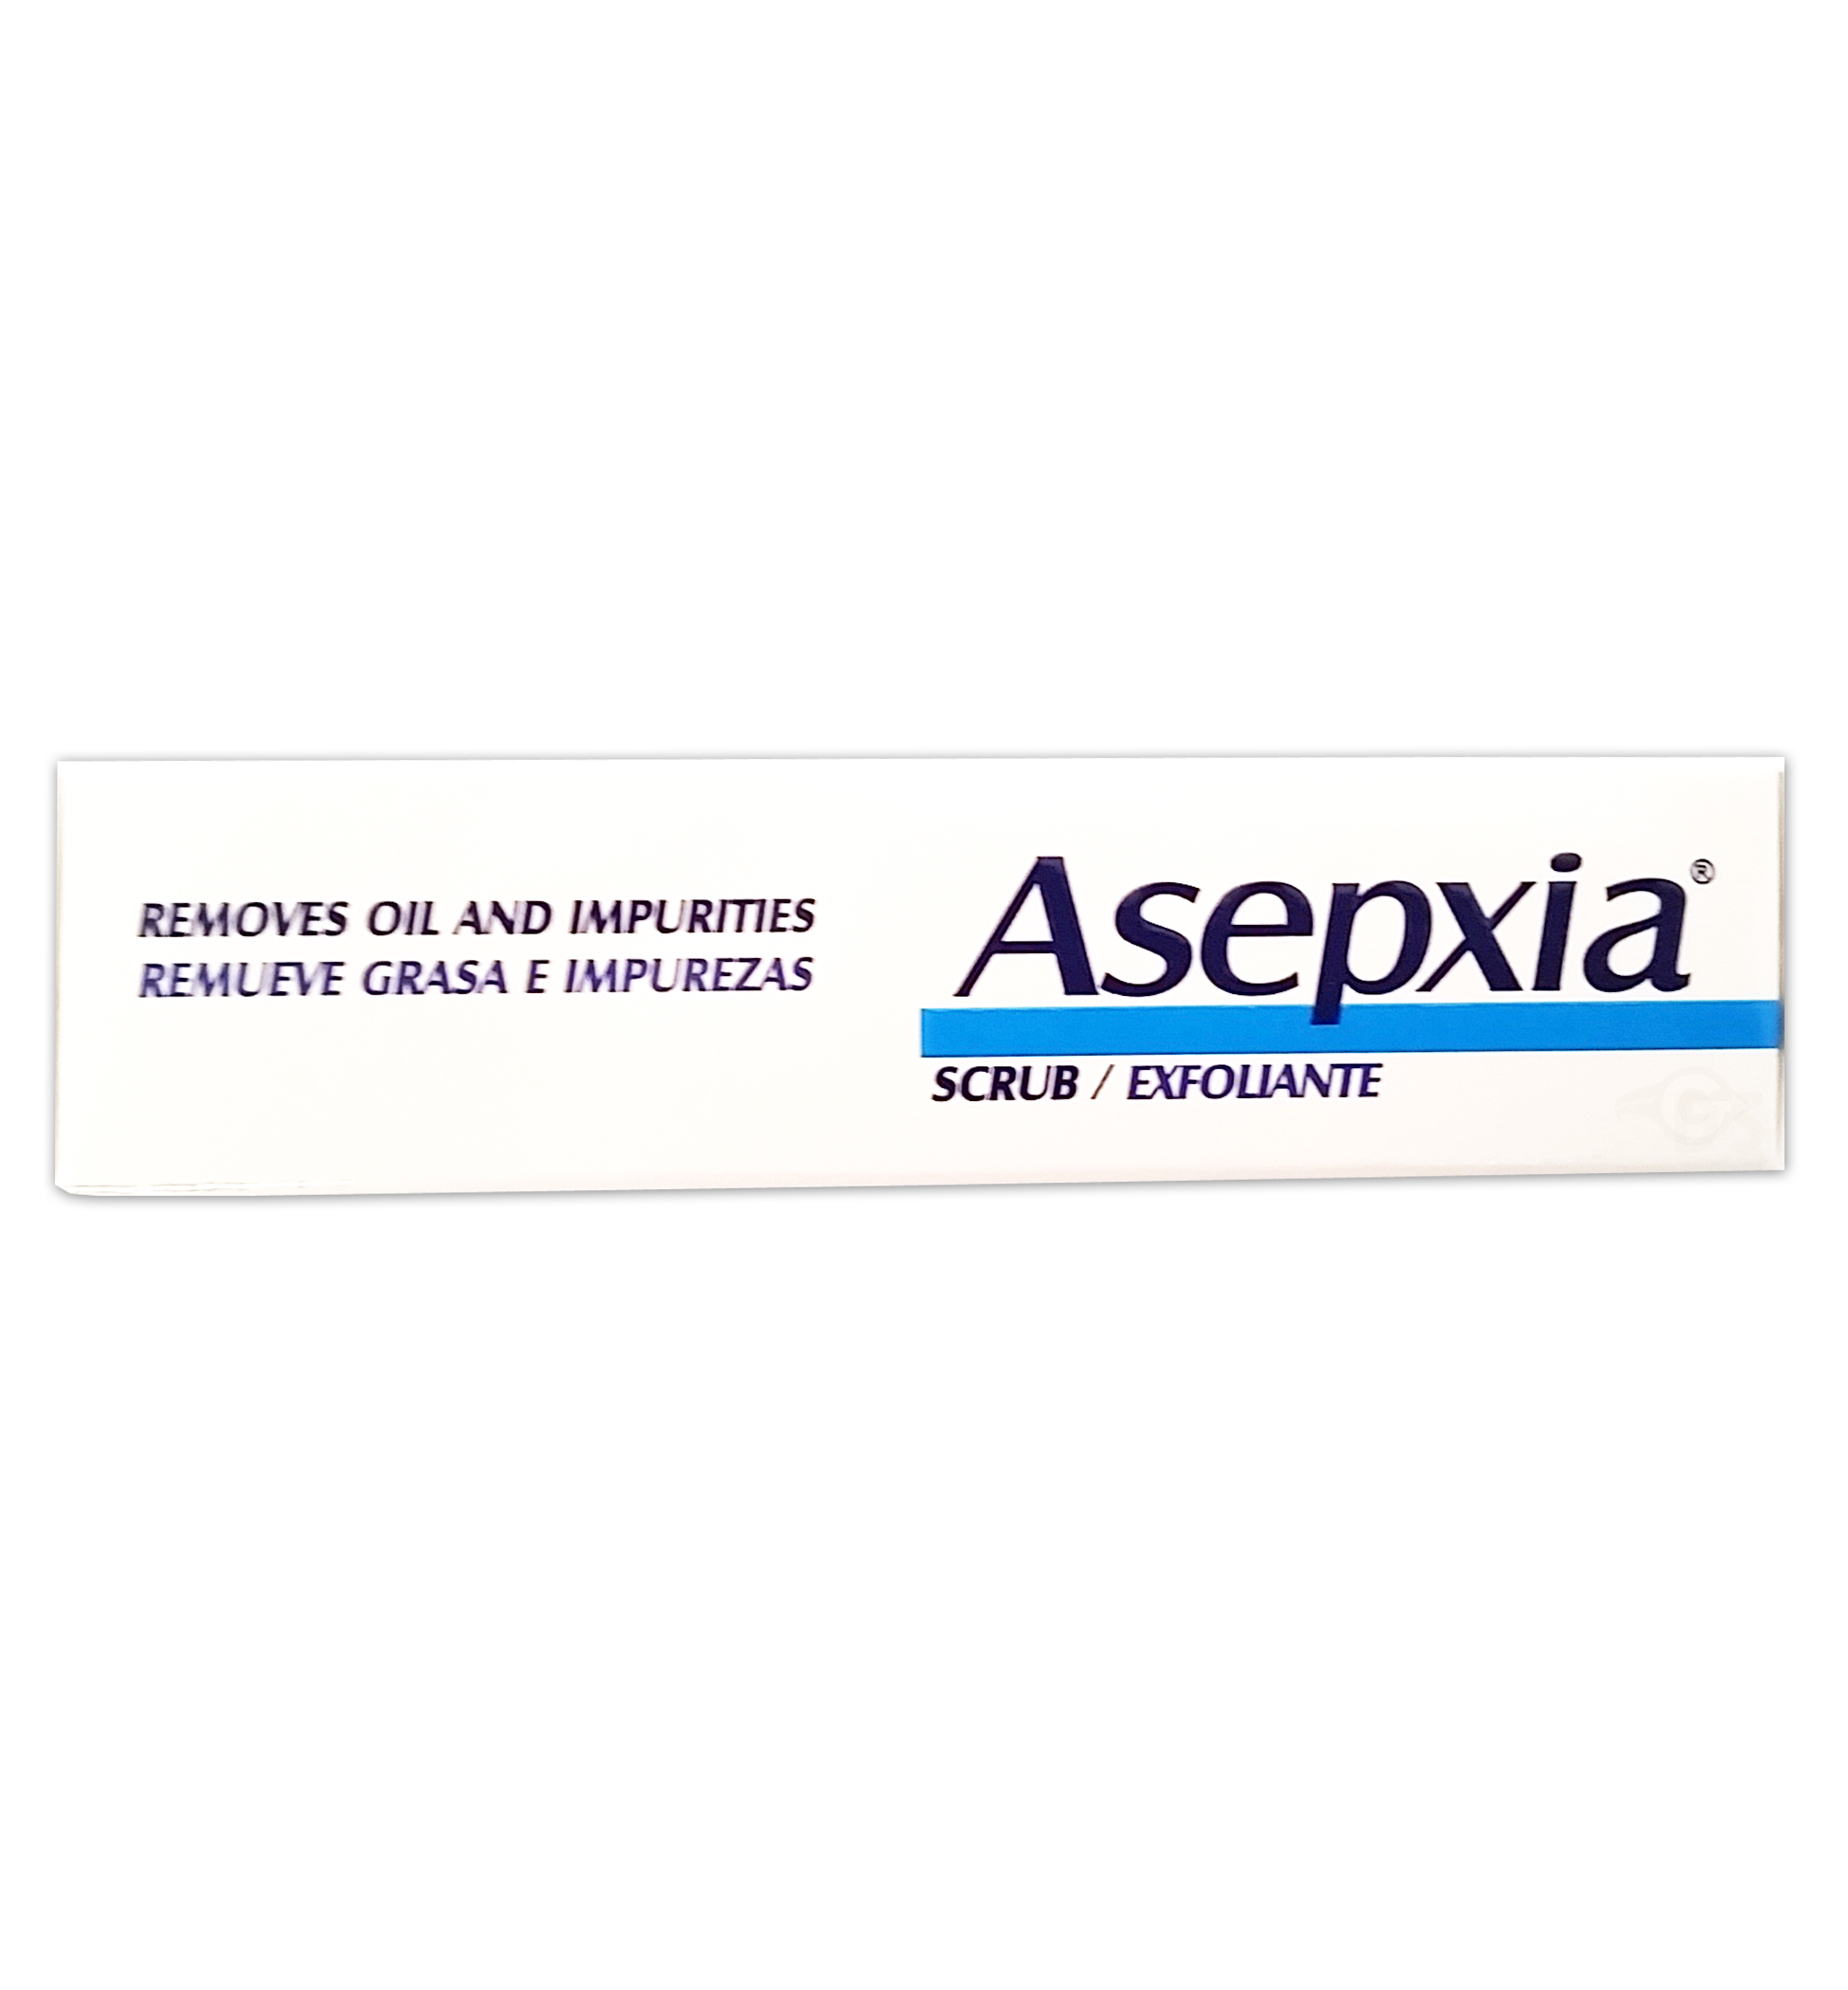 Asepxia Soap Scrub (blue) 3.52 oz - Jabon Exfoliante Azul (Pack of 4) - image 2 of 3